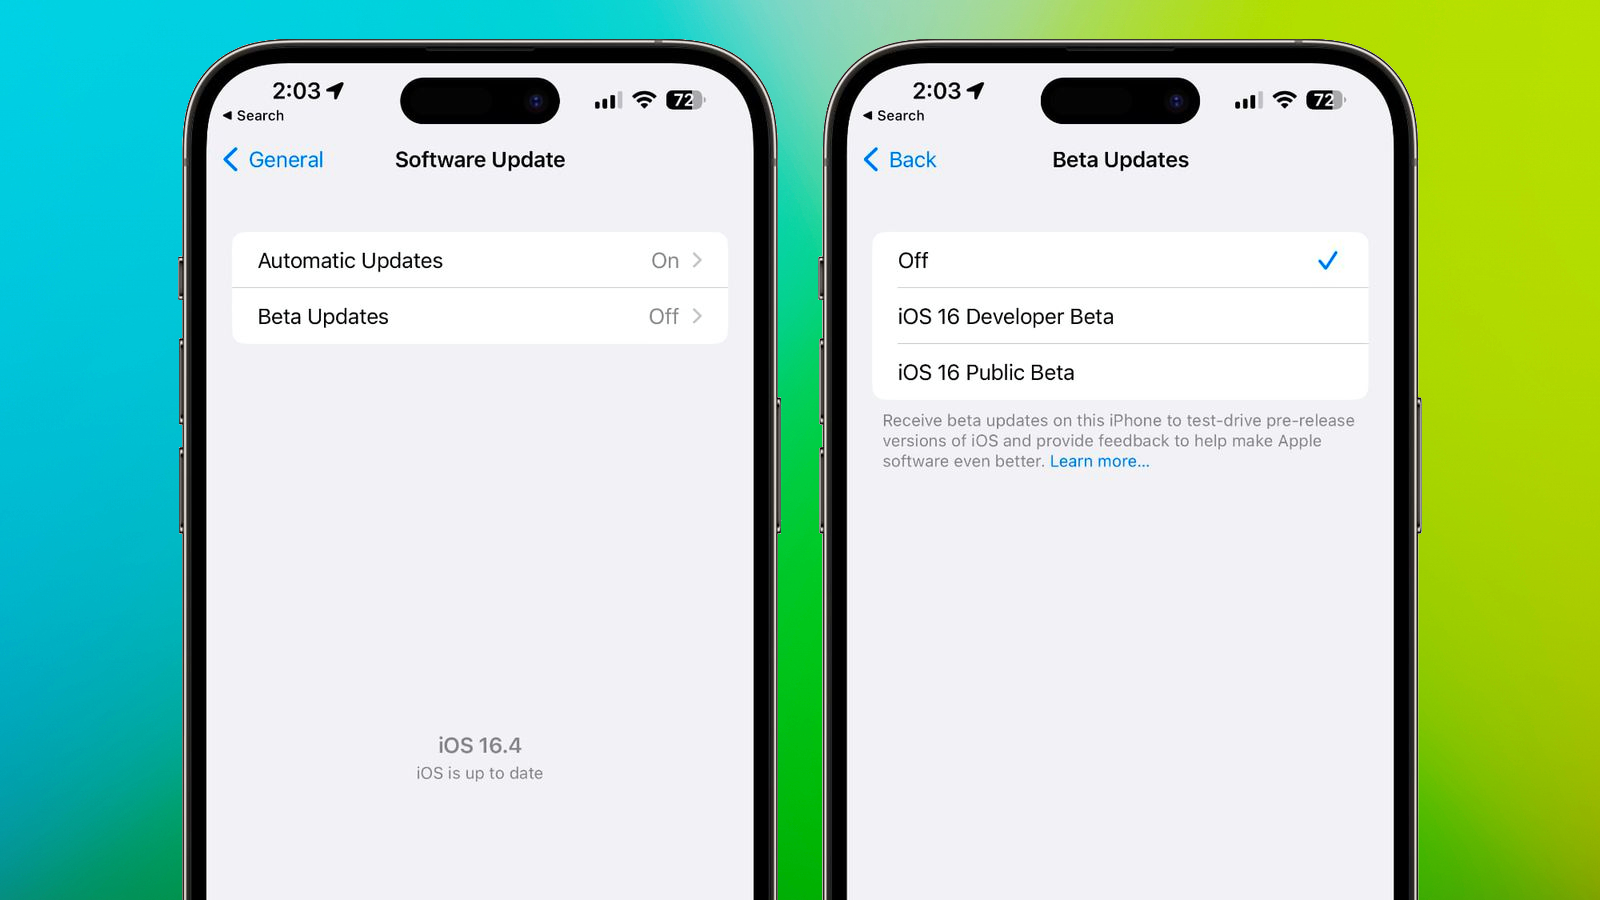 iOS 16 4 Beta Updates Menu